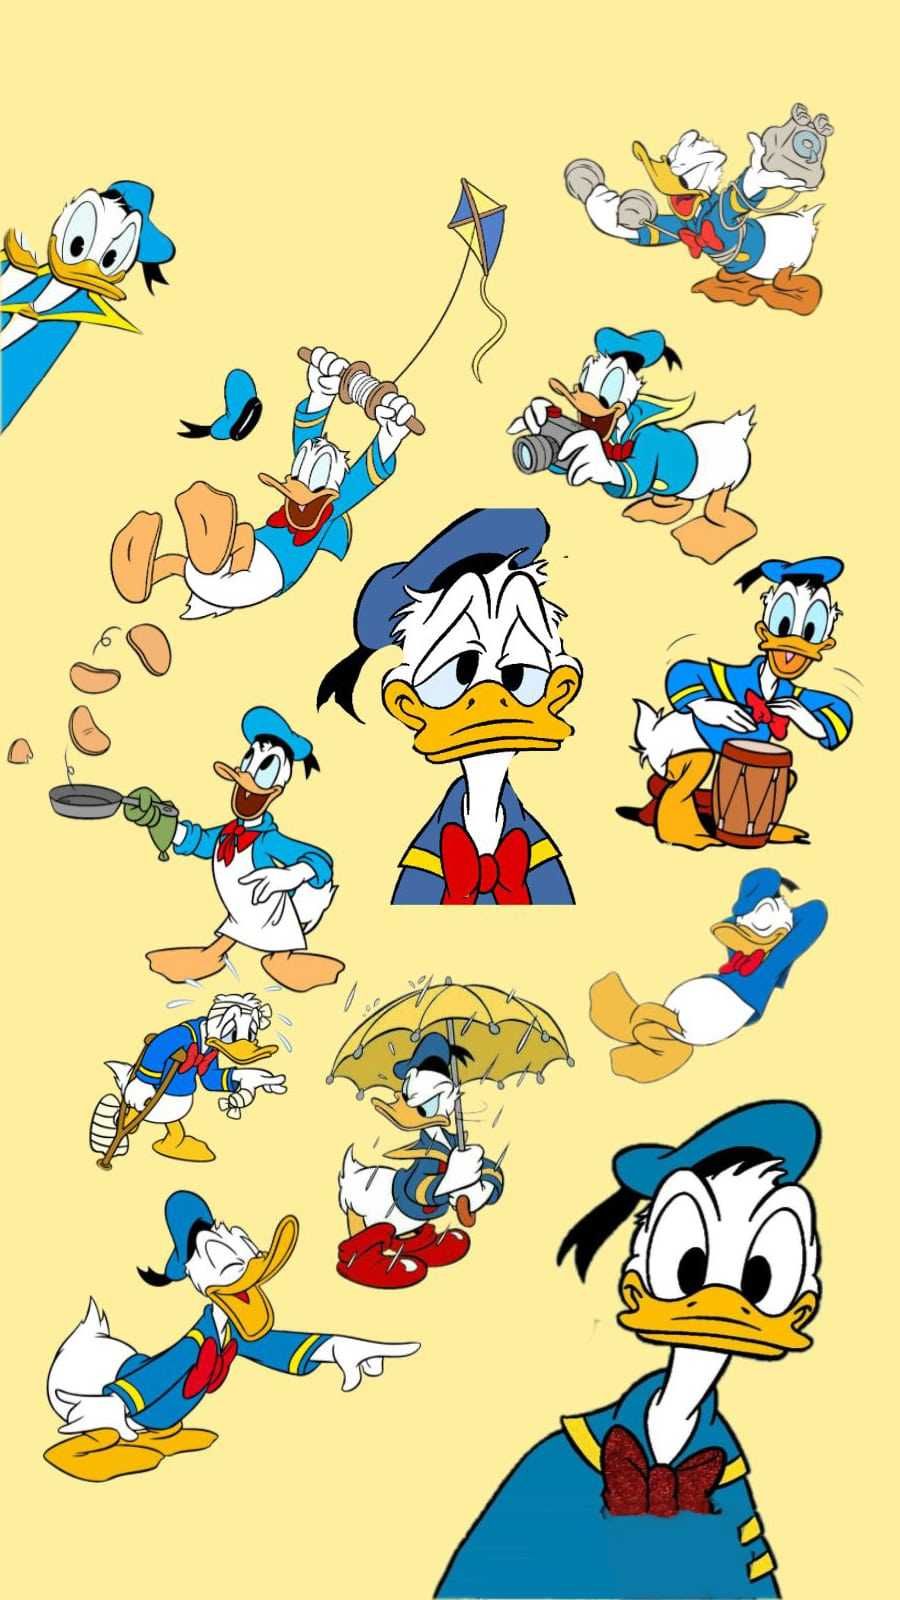 Donald Duck Wallpaper Discover more Cartoon, Disney, Donald Duck, Walt Disney wallpaper. /donal. Duck wallpaper, Disney wallpaper, Disney art